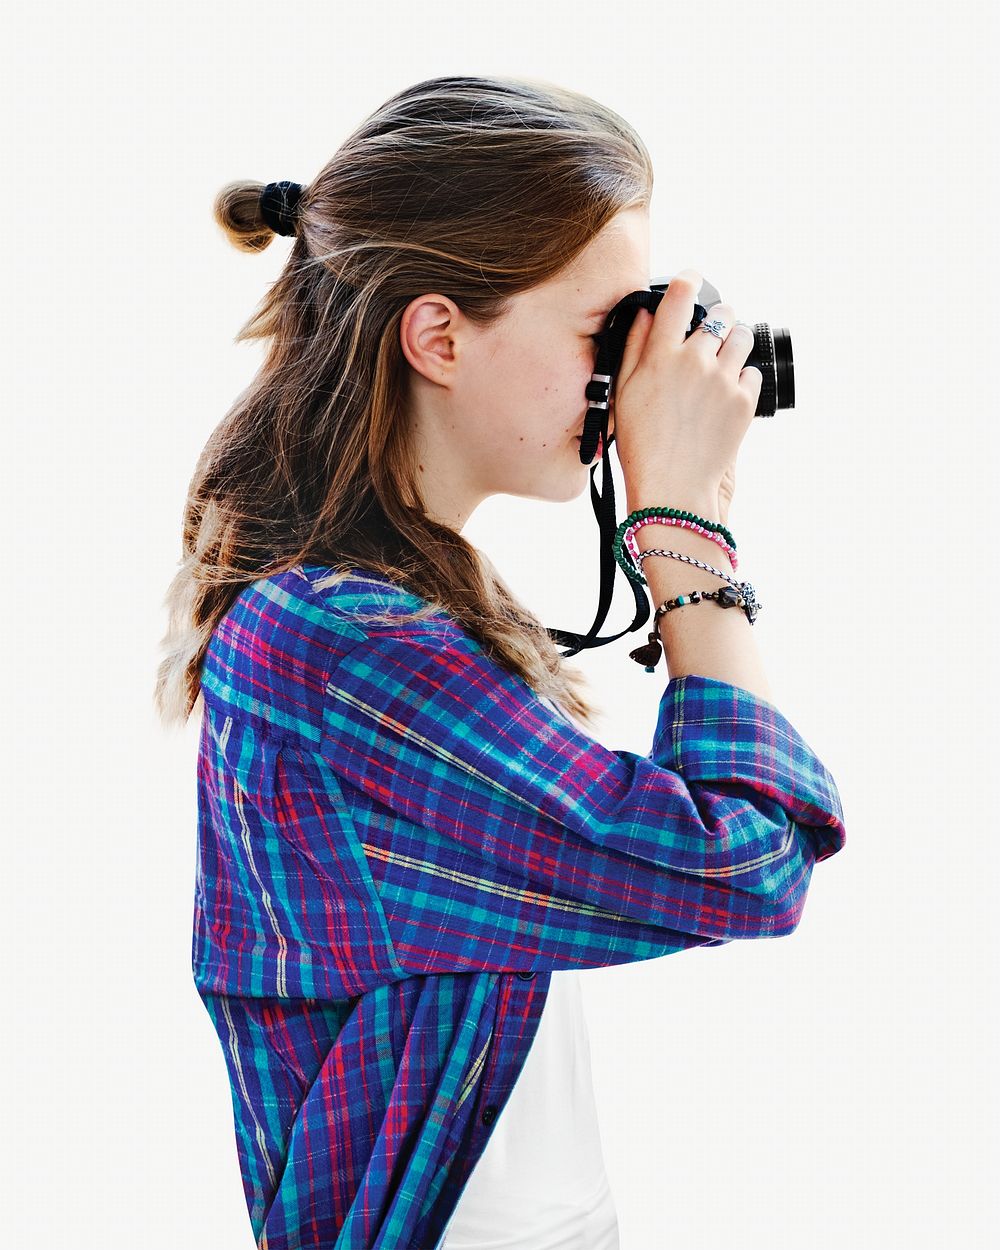 Woman taking photo, isolated image